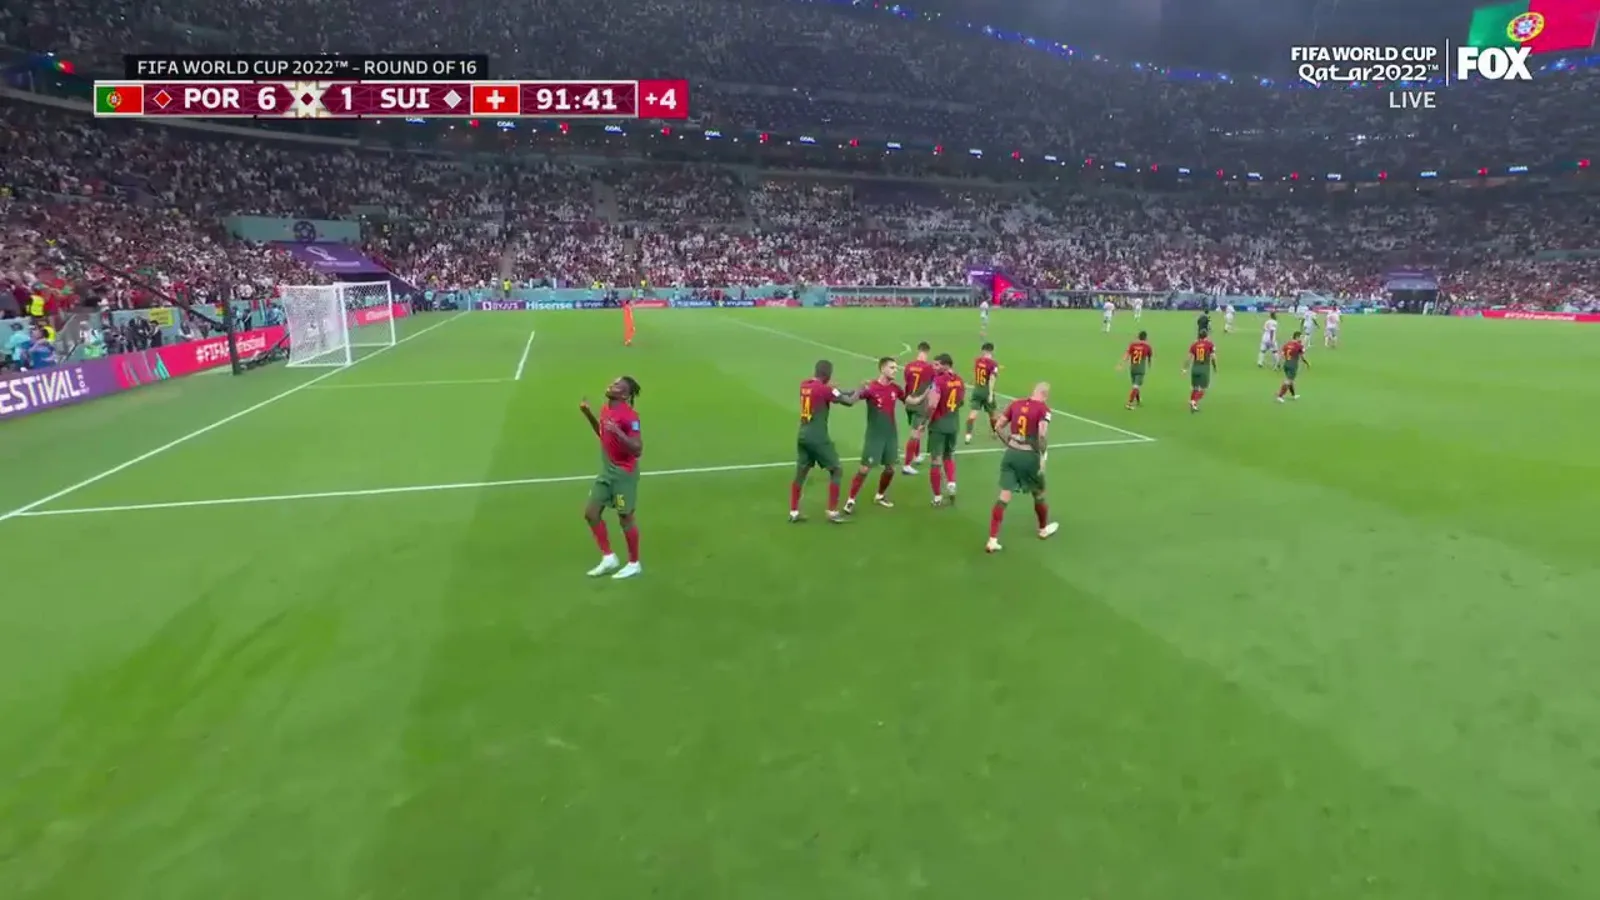 Portugal's Rafael León scores in the 90+2 minute against Switzerland